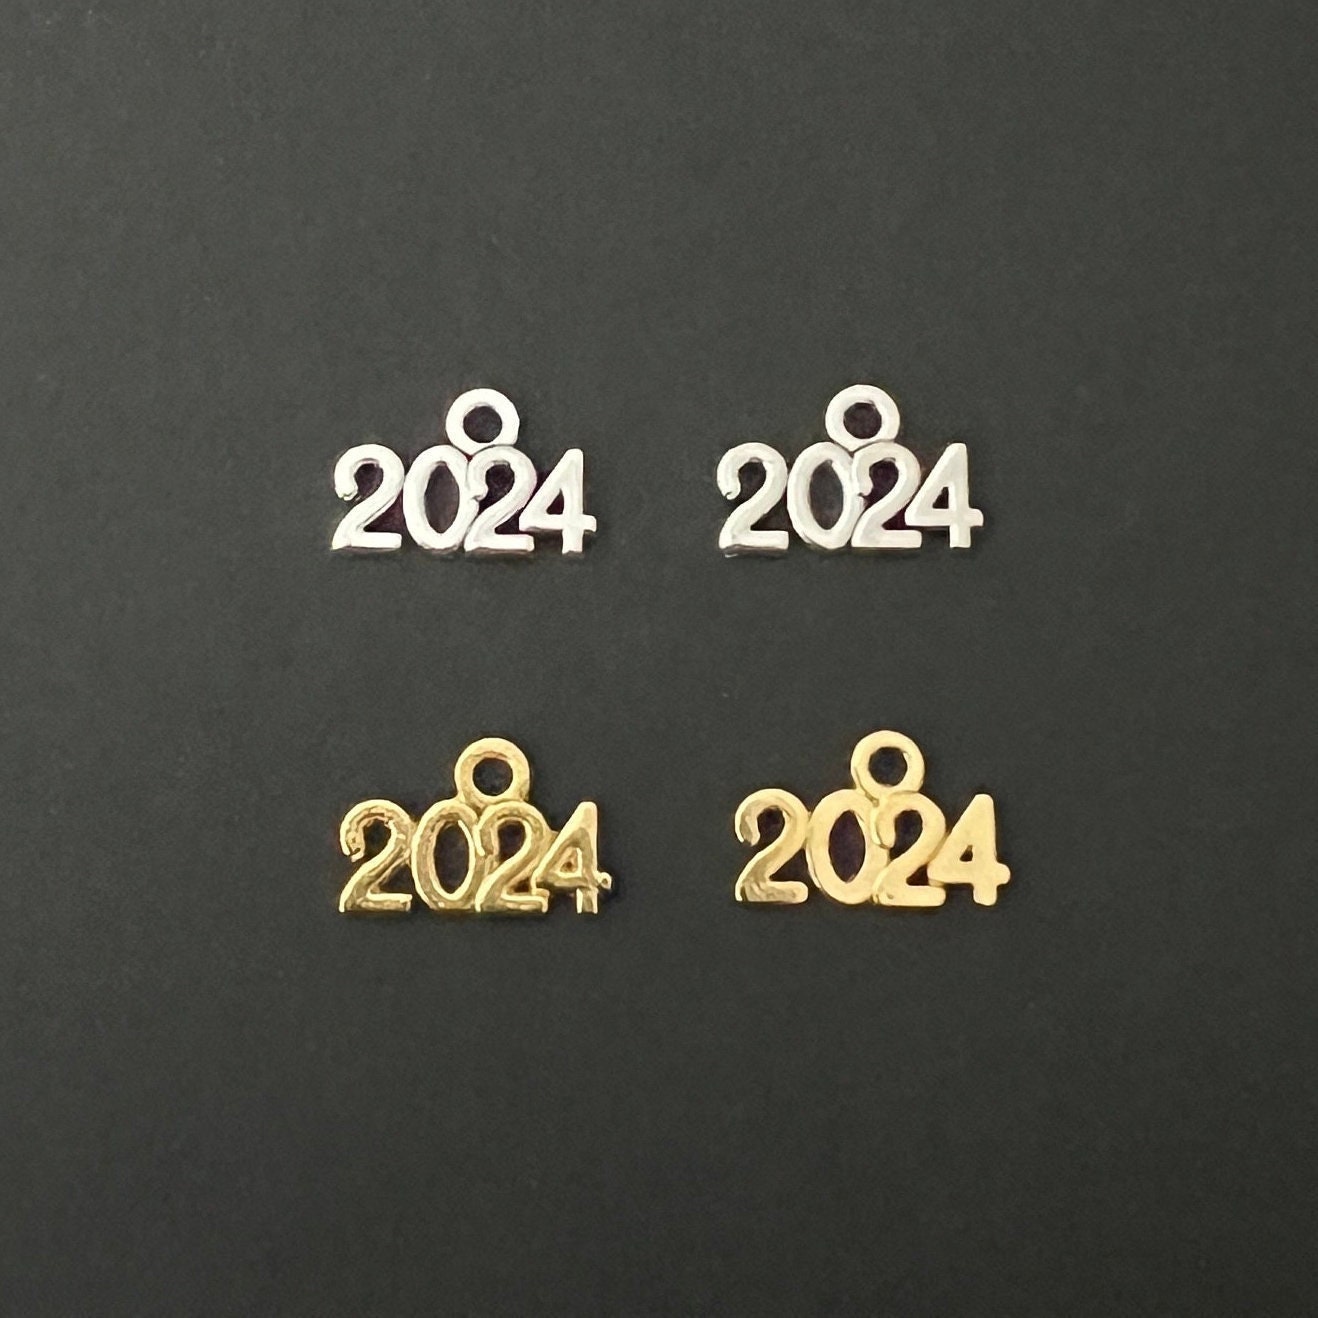  NOLITOY 100pcs 2024 2024 Pendant Jewelry Making Charms Letter  Charms Year of 2024 Charms Number Charms 2024 Charms for Ornaments  Graduation Cap Tassel Charm Stamp Alloy : Arts, Crafts & Sewing